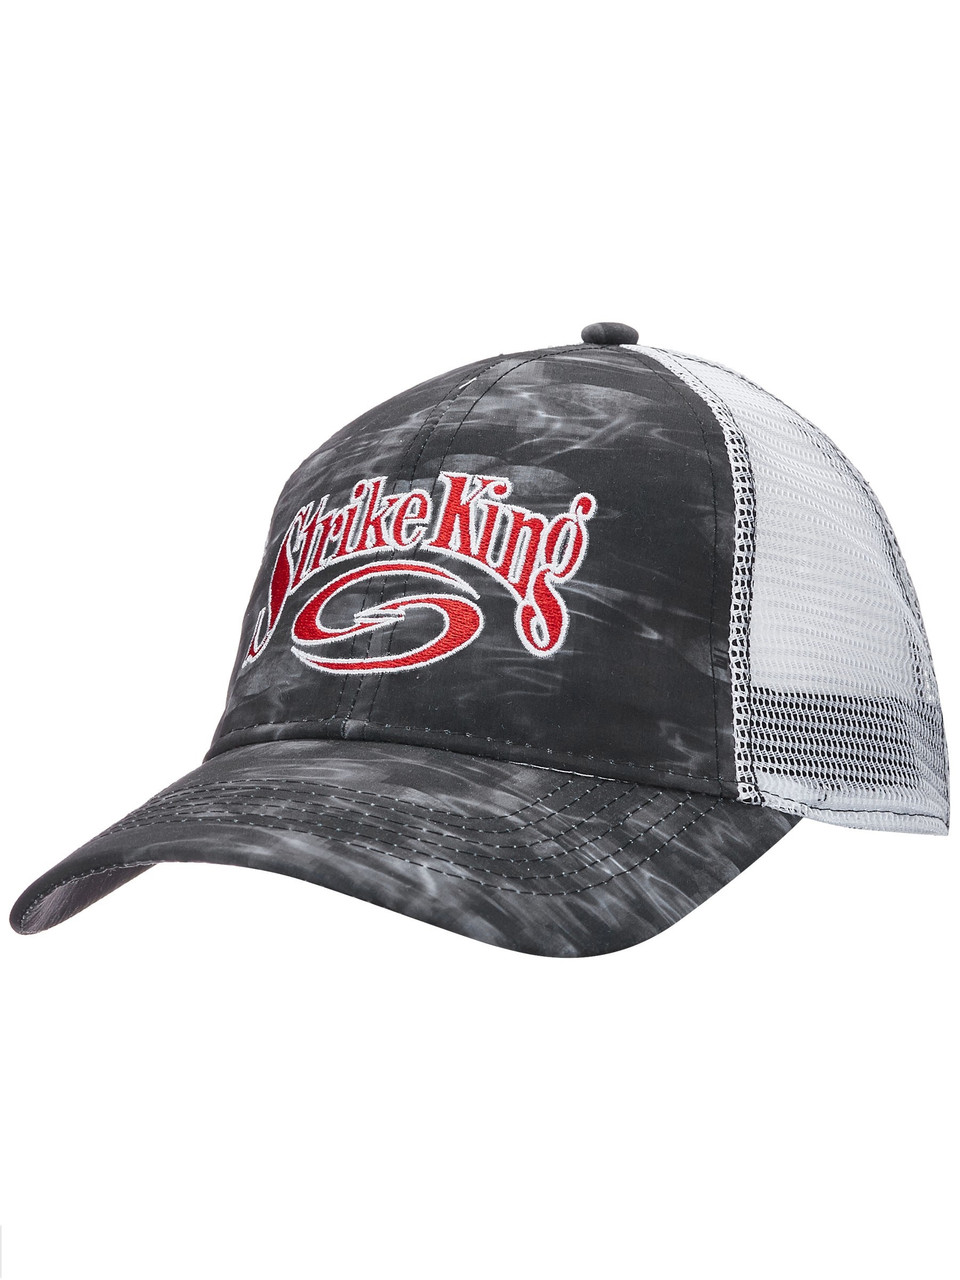 Strike King Trucker Cap Hat, Scale Tech Black/White - CAP-5